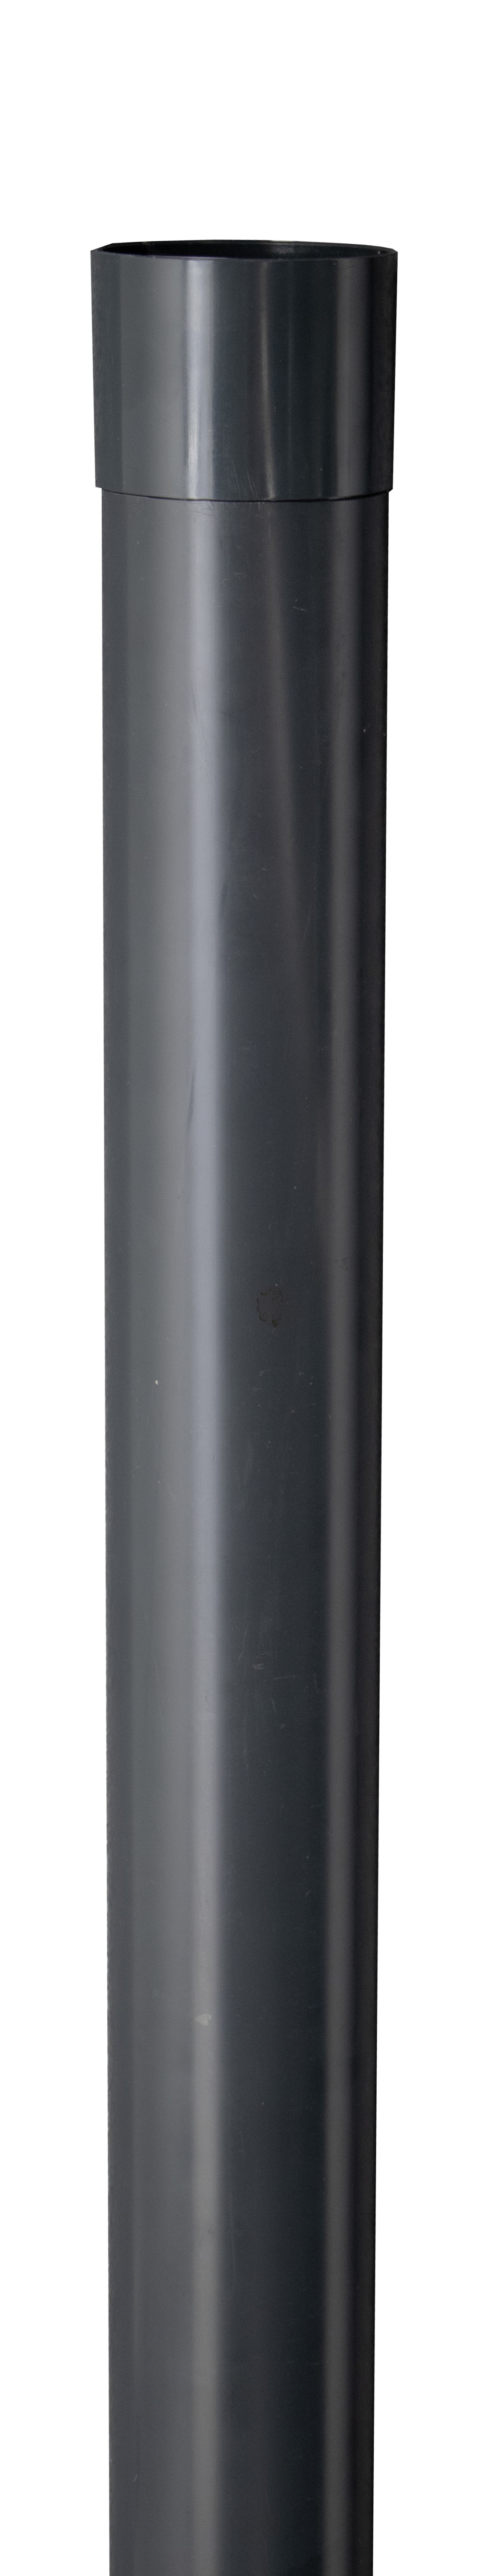 Fallrohr PVC Anthrazit DN75 - 2500 mm lang